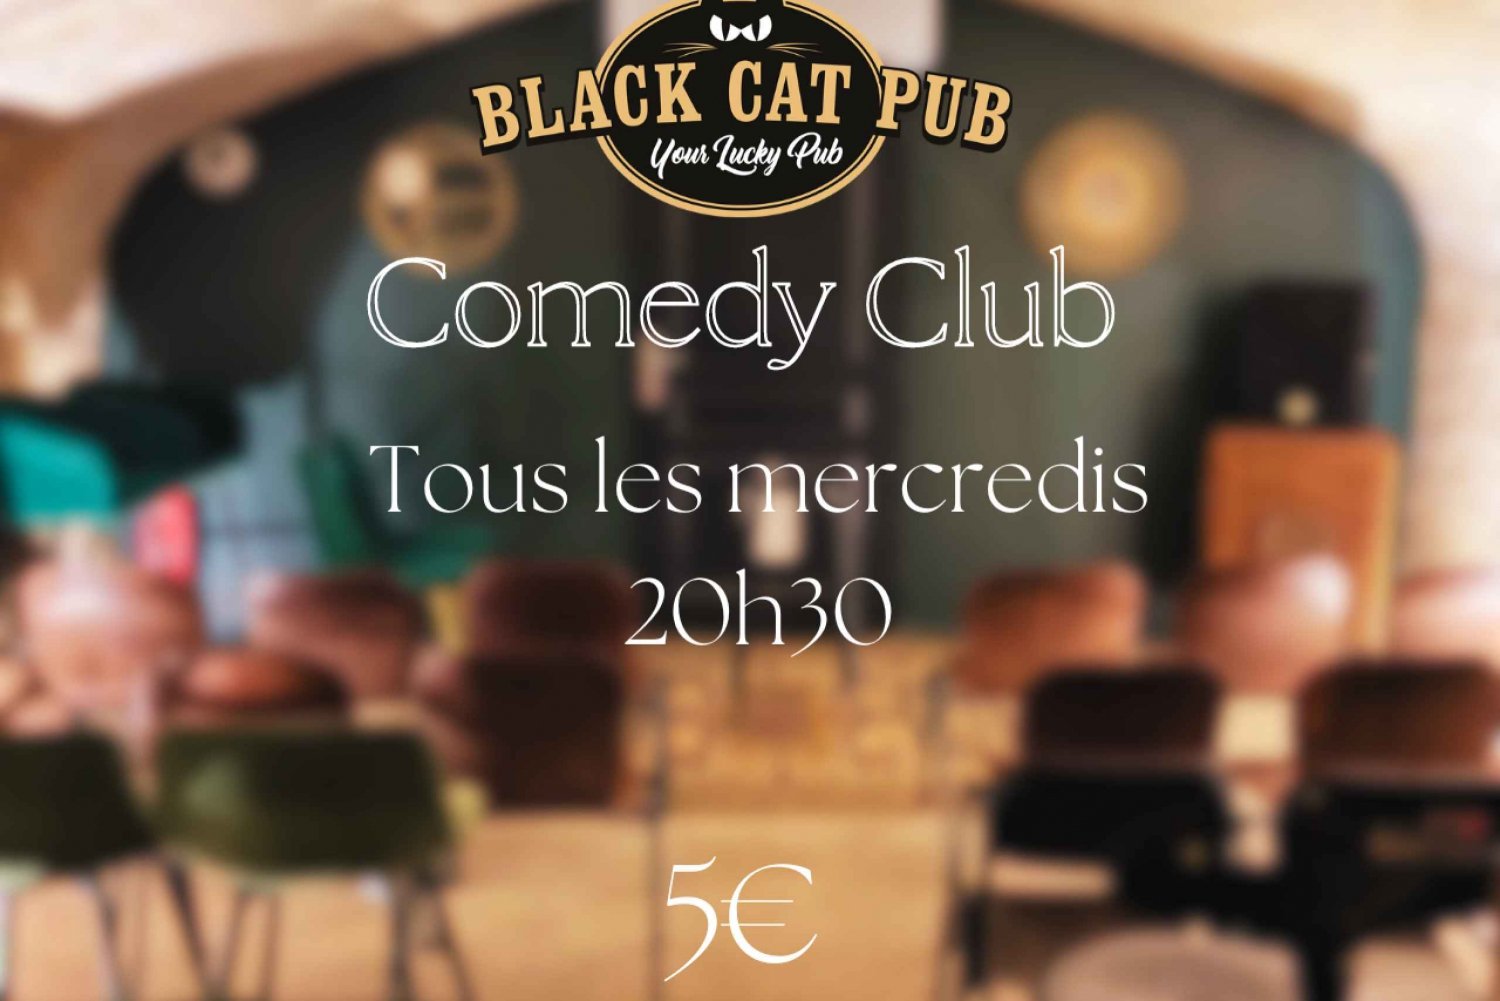 Klub komediowy Czarny Kot